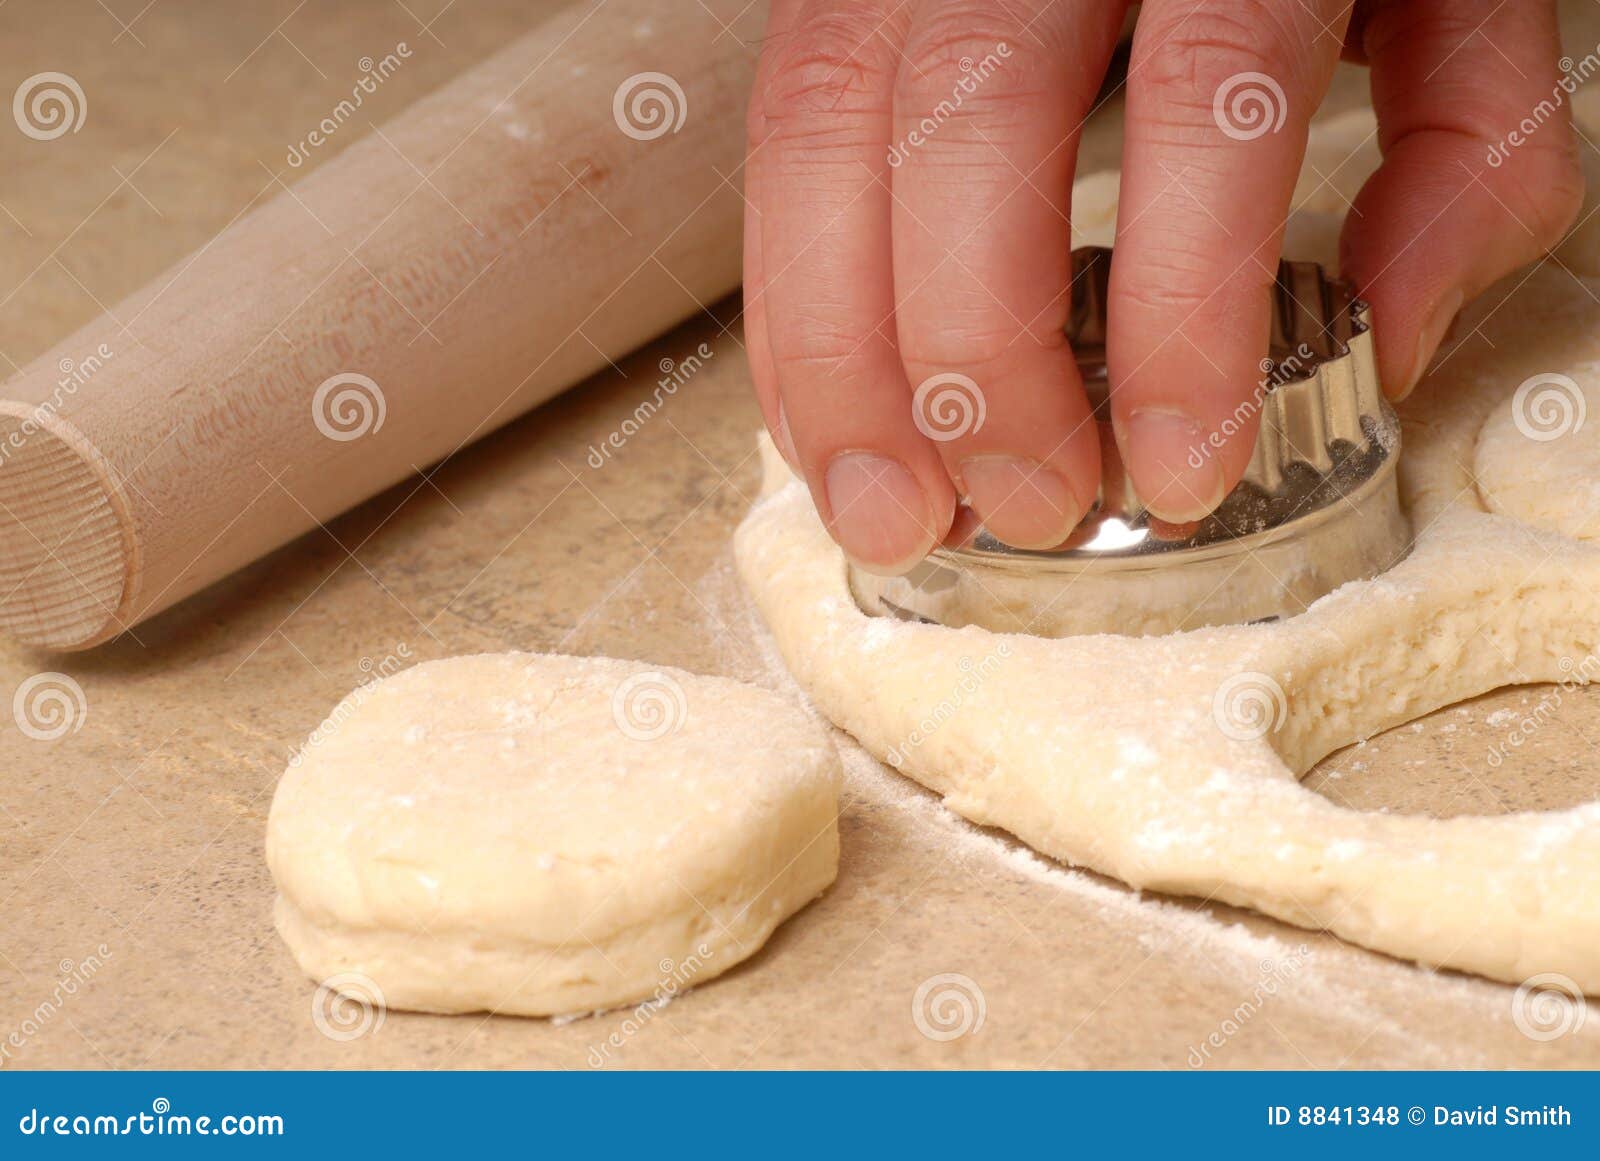 cutting out buttermilk biscuit dough